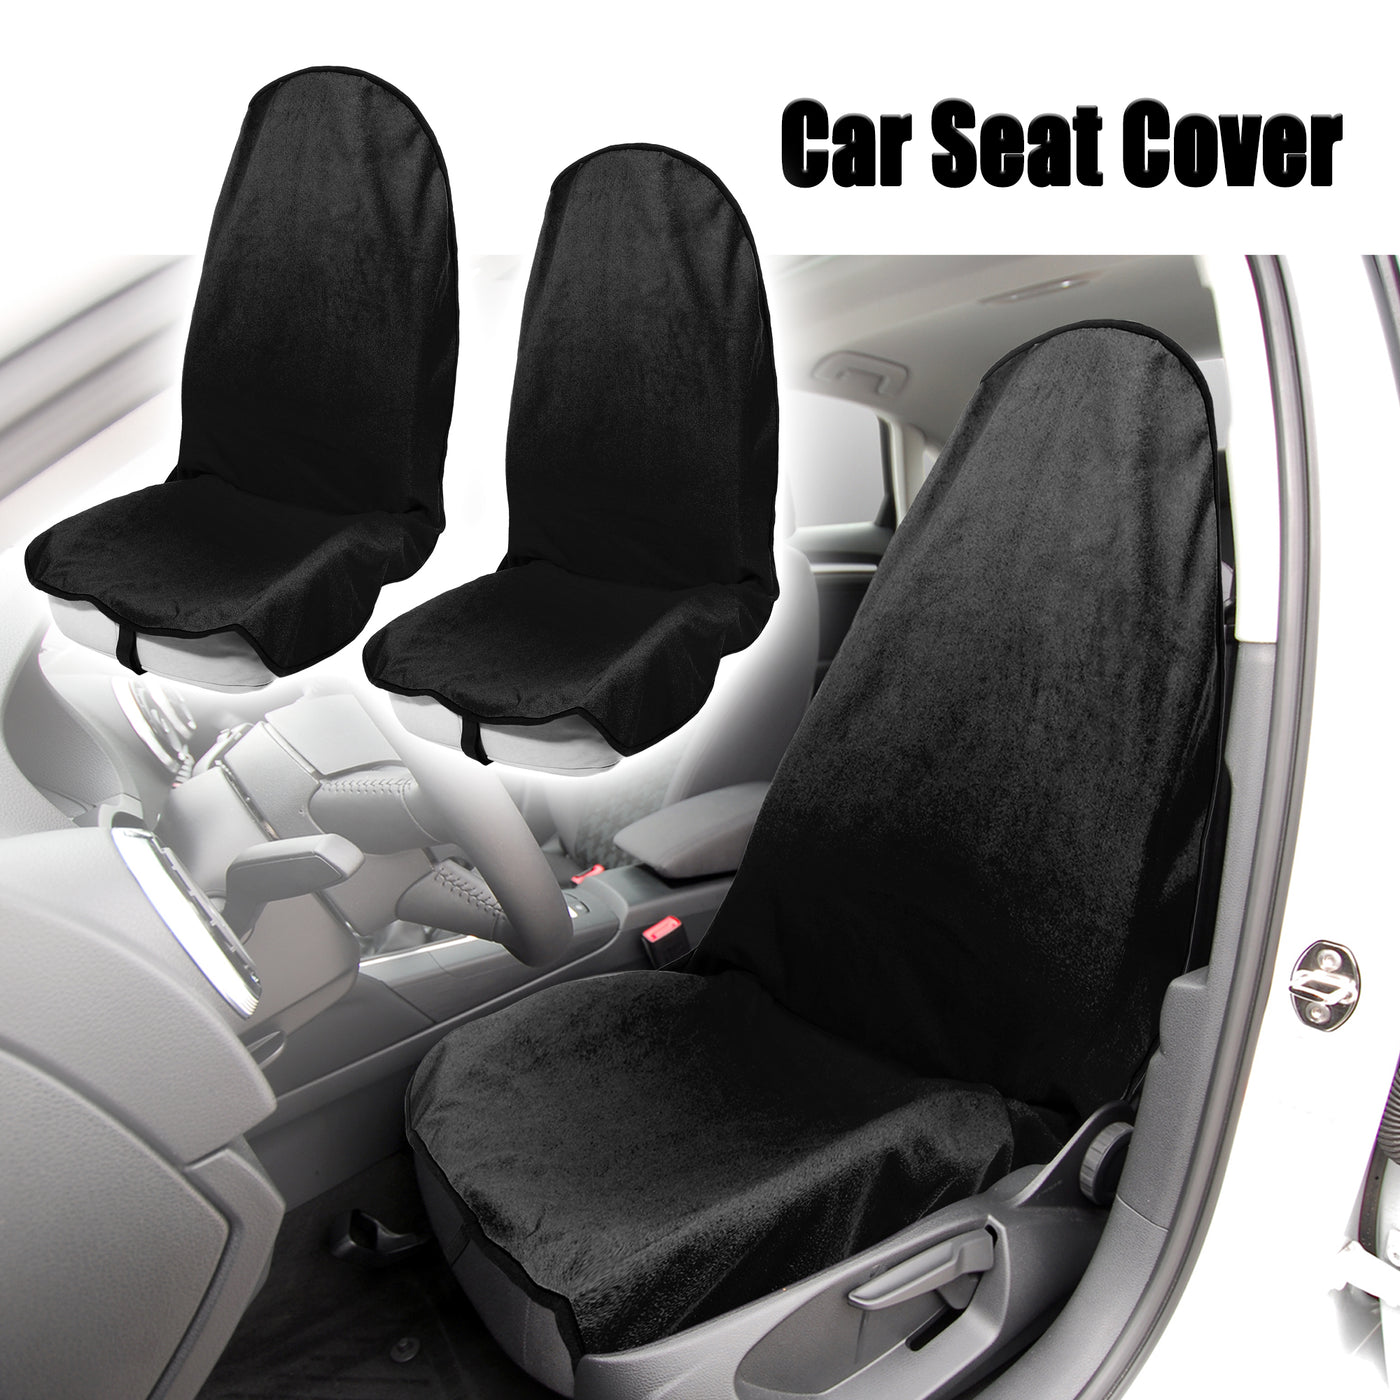 X AUTOHAUX 2pcs Black Universal Car Seat Cover Anti-Slip Towel Seat Protector Pad for Car Trucks SUV